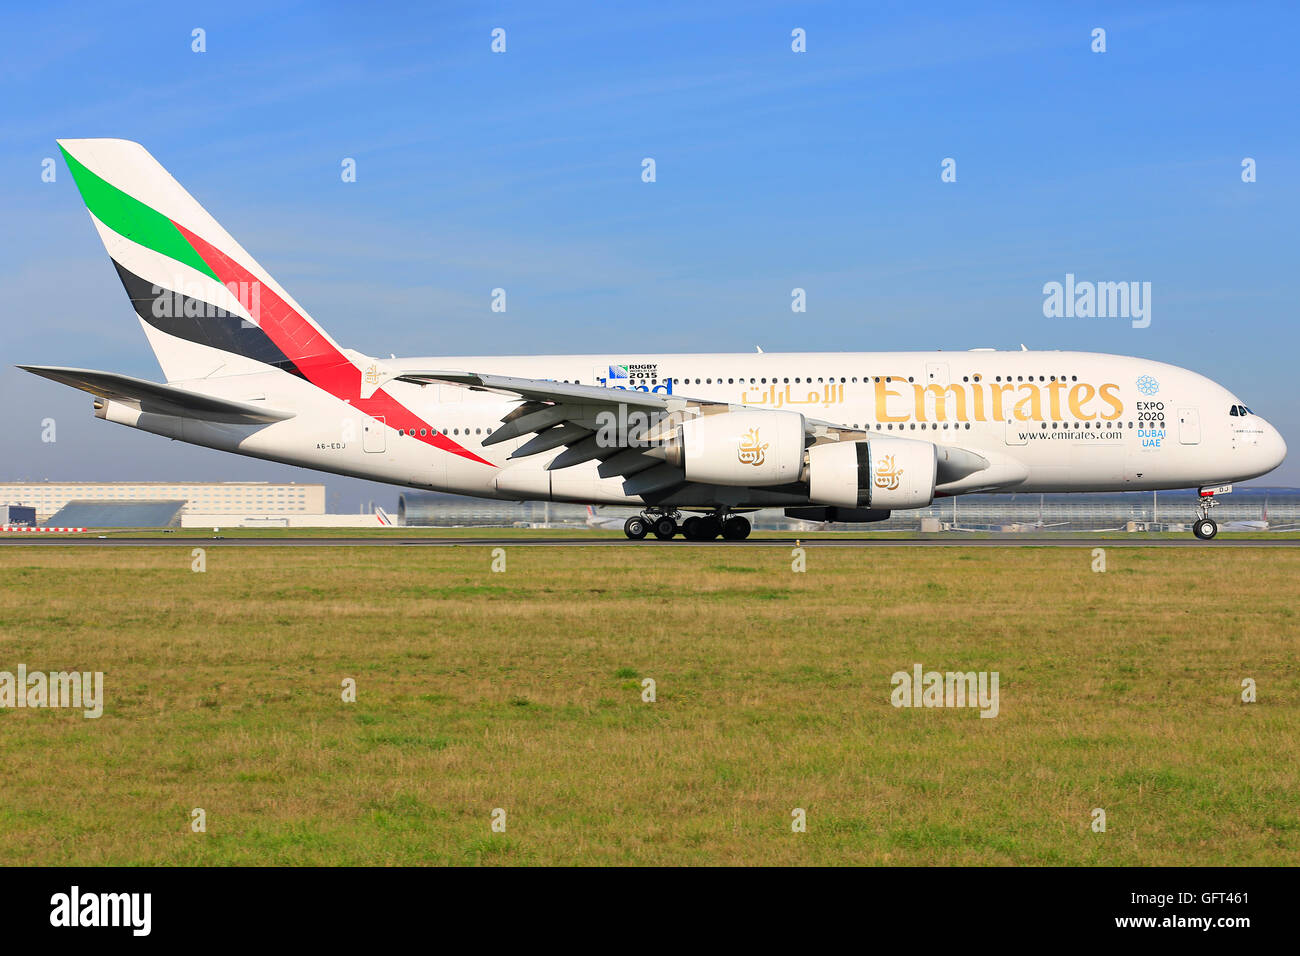 Paris/France Oktober 9, 2015: Airbus A380 from Emirates Airways landing at Paris Airport. Stock Photo